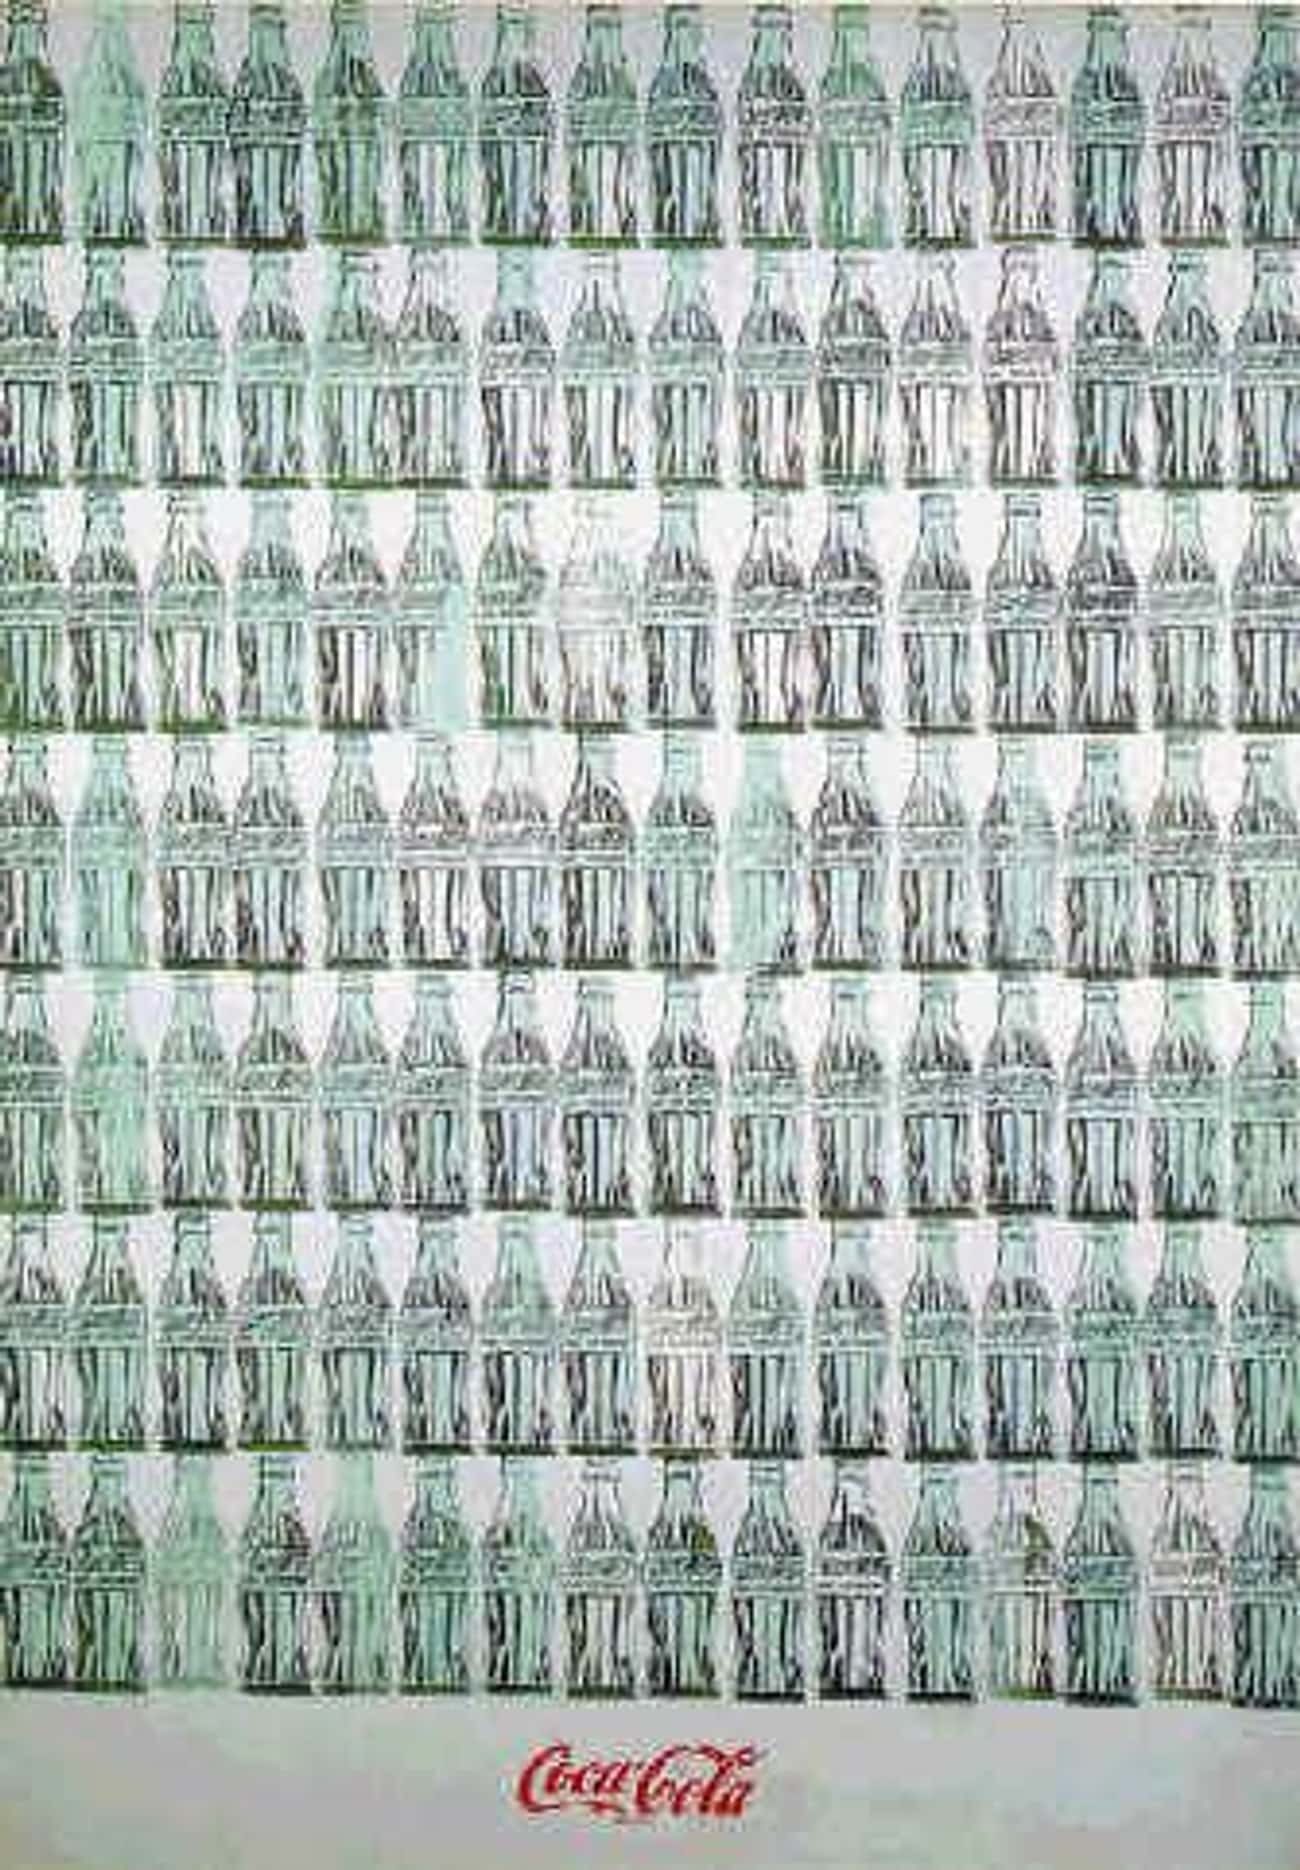 Green Coca-Cola Bottles